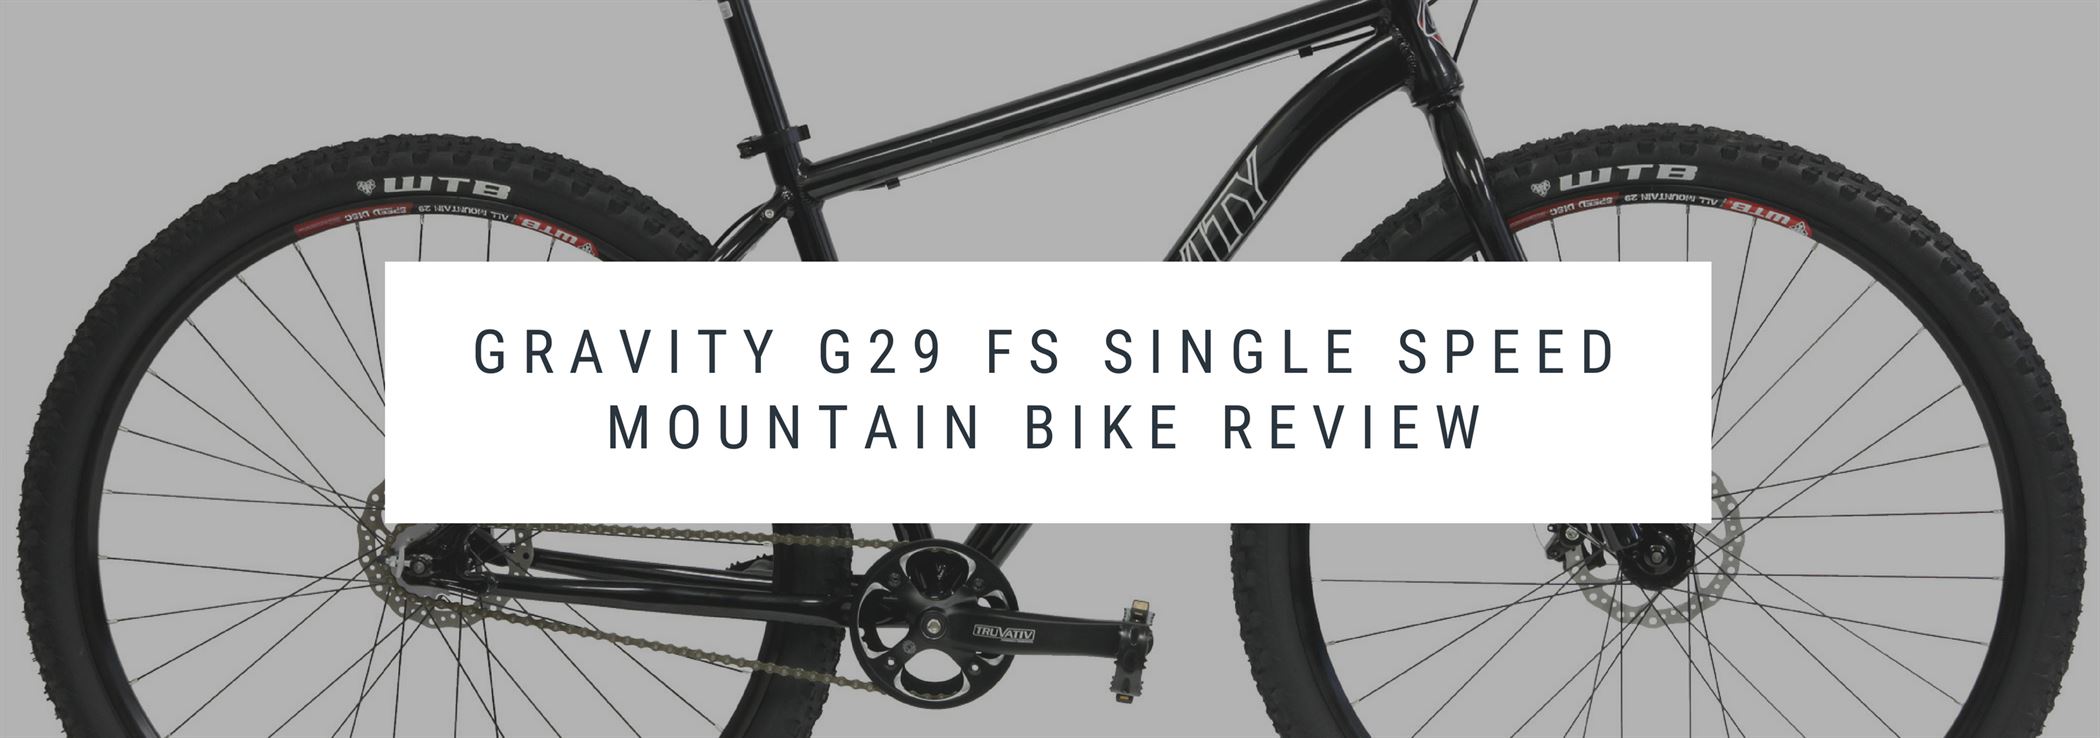 gravity g29 single speed mountain bike